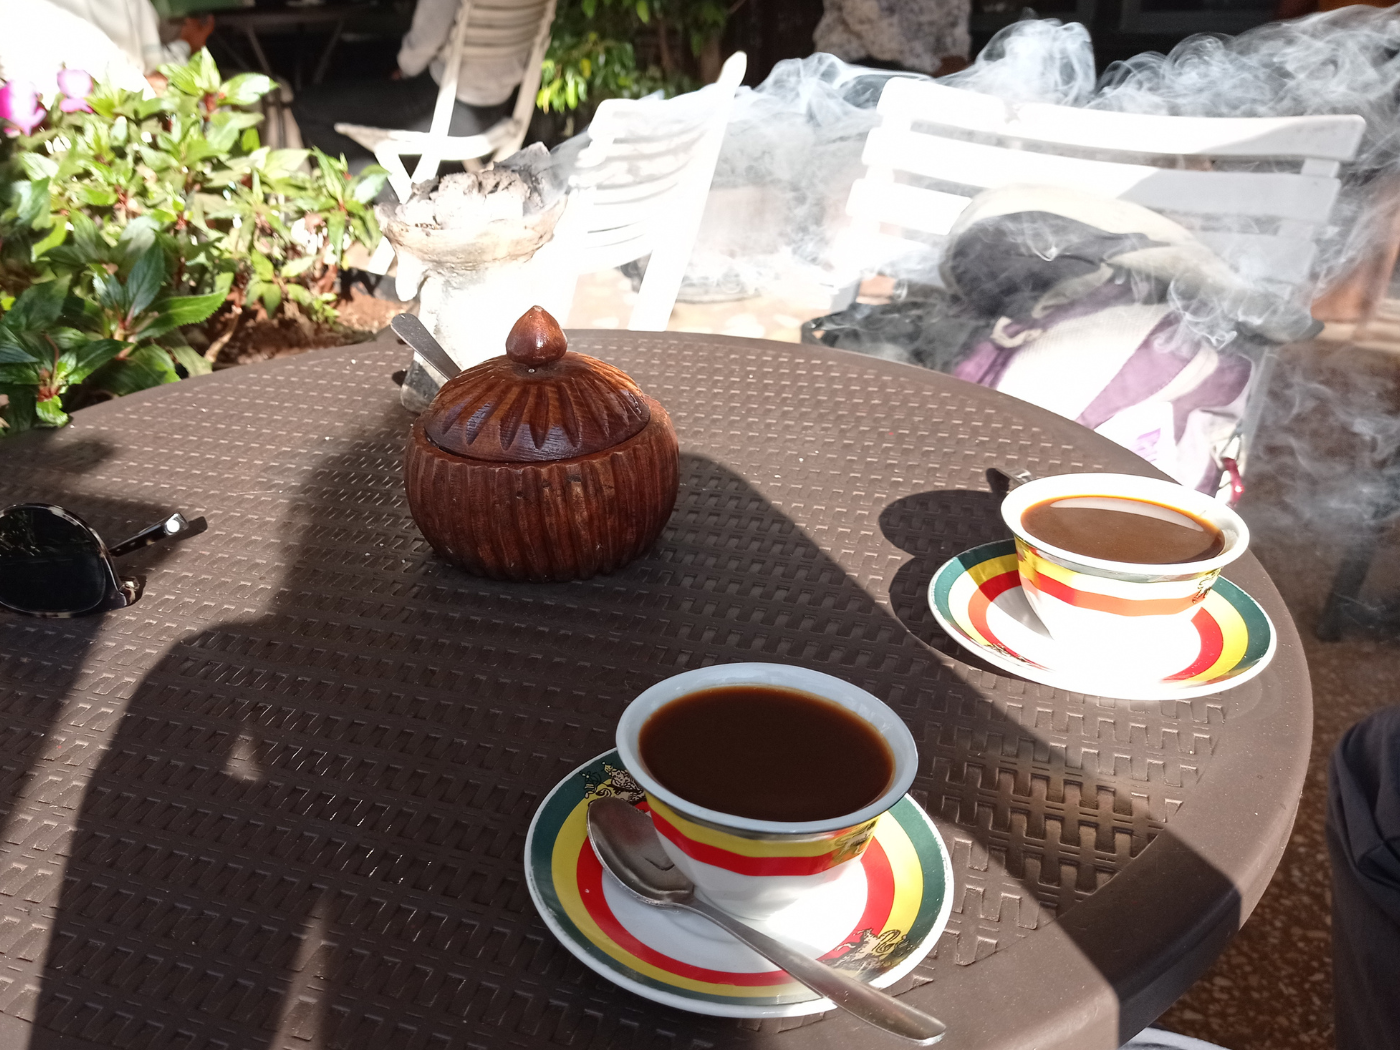 Ethiopian coffee incense smoke ceremony